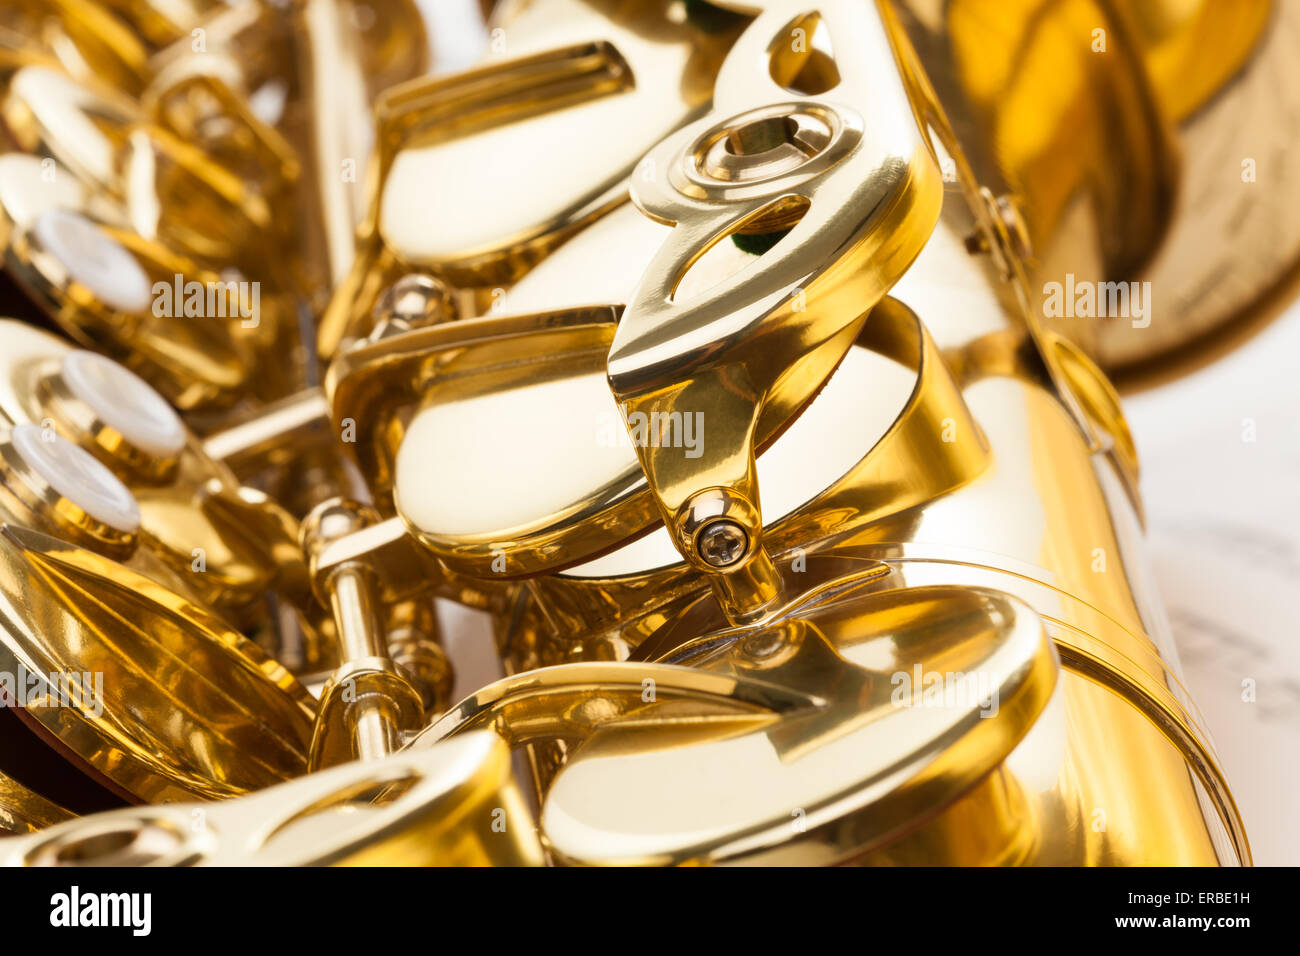 Alto saxophone fragment with detailed view of keys Stock Photo